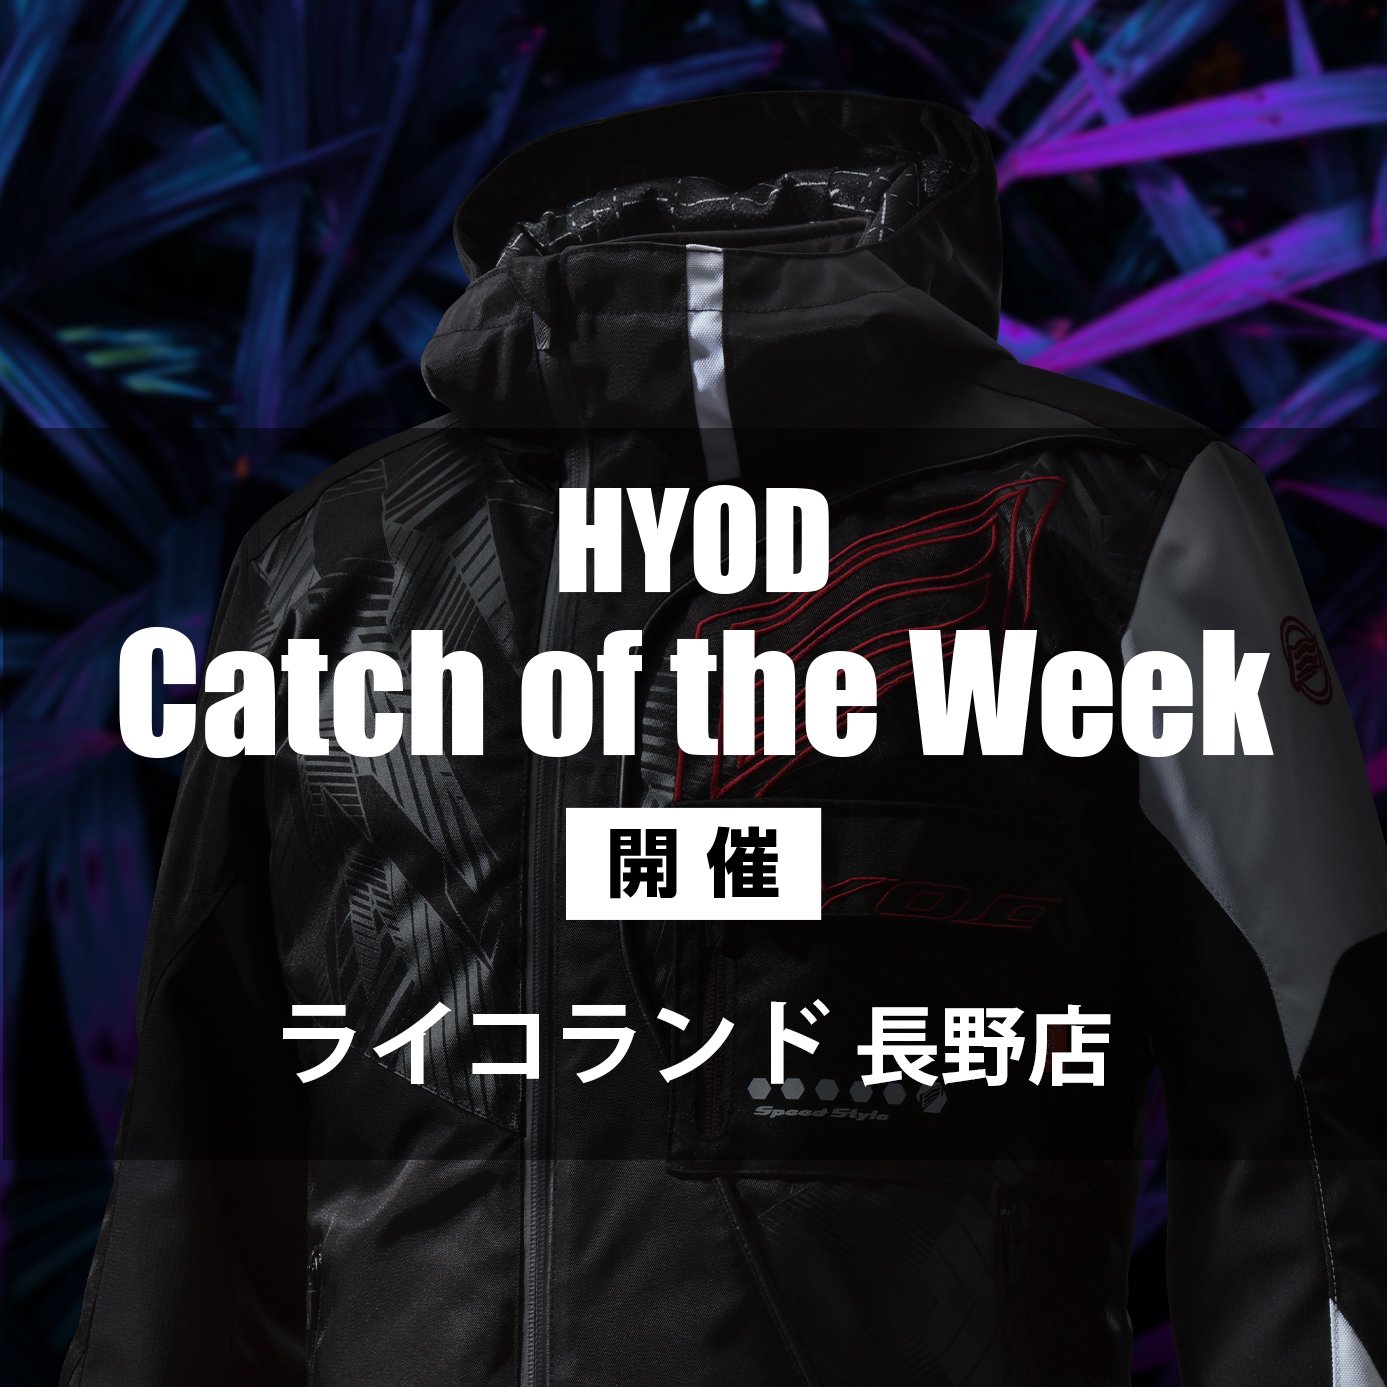 hyod catch of the week top.jpg